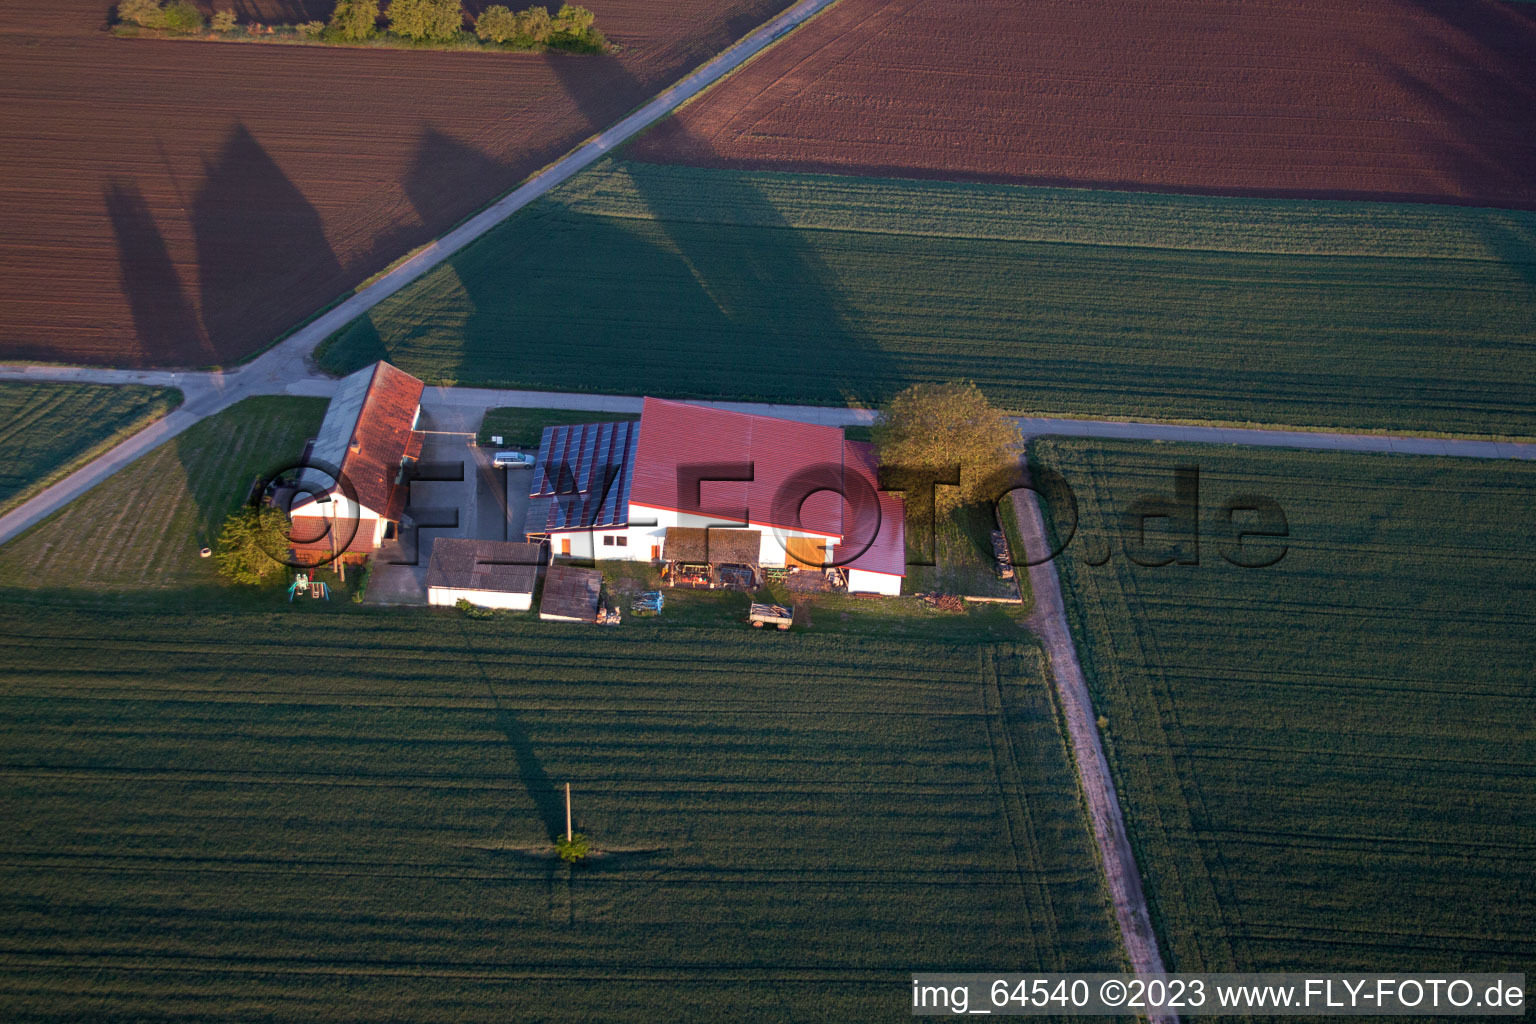 Drone recording of Billigheim-Ingenheim in the state Rhineland-Palatinate, Germany